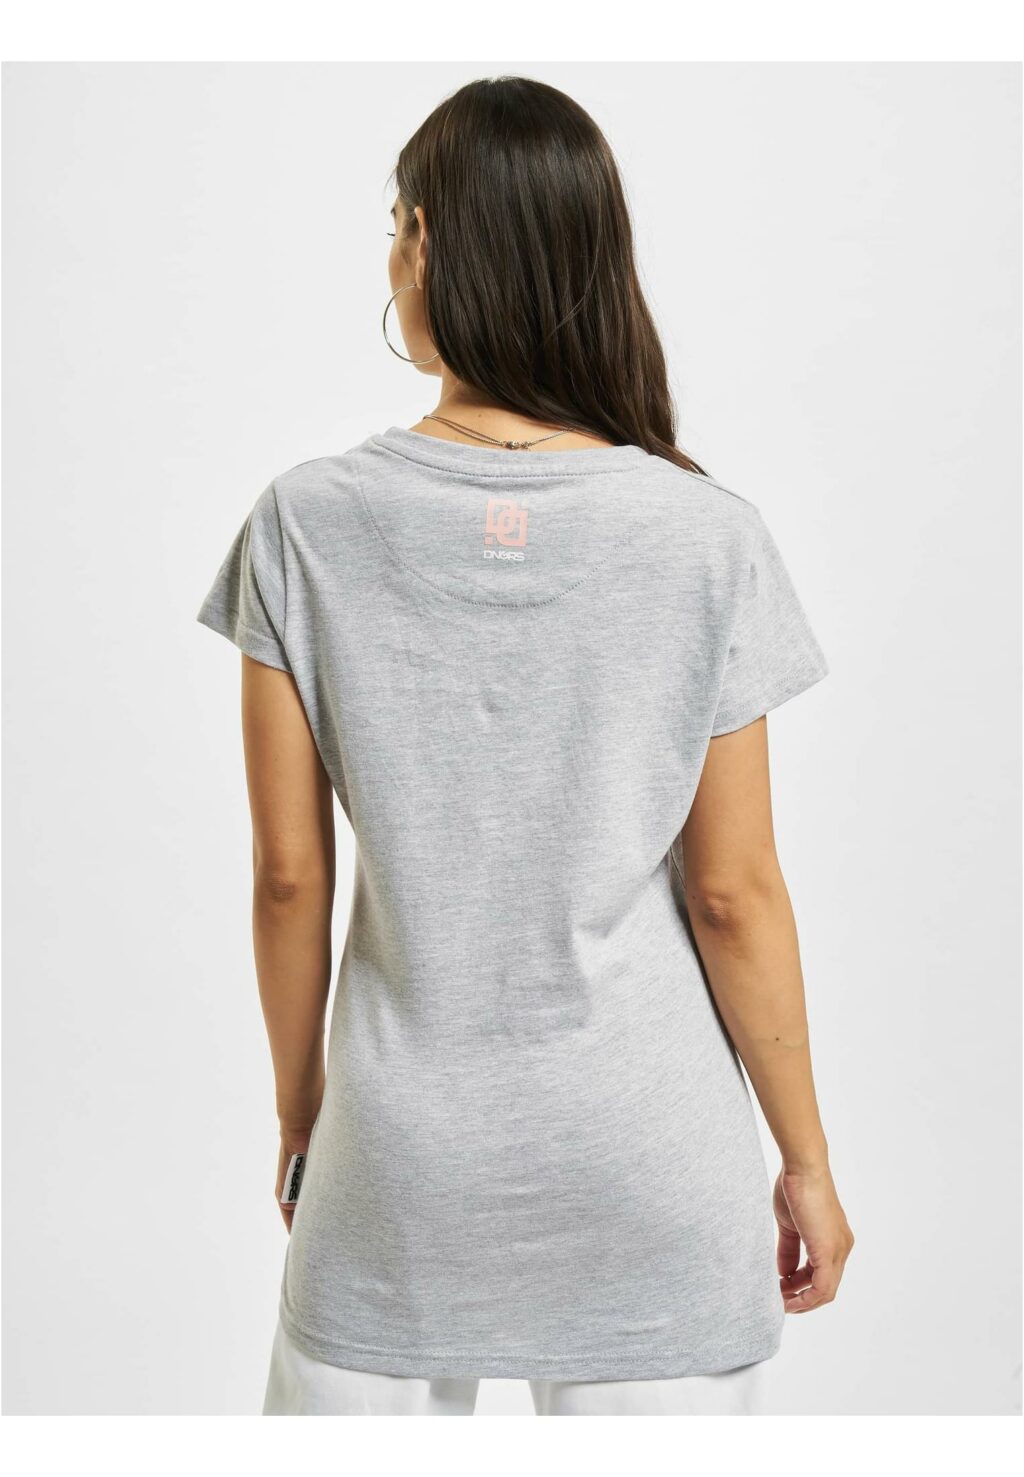 Crux T-Shirt grey DLTS3010